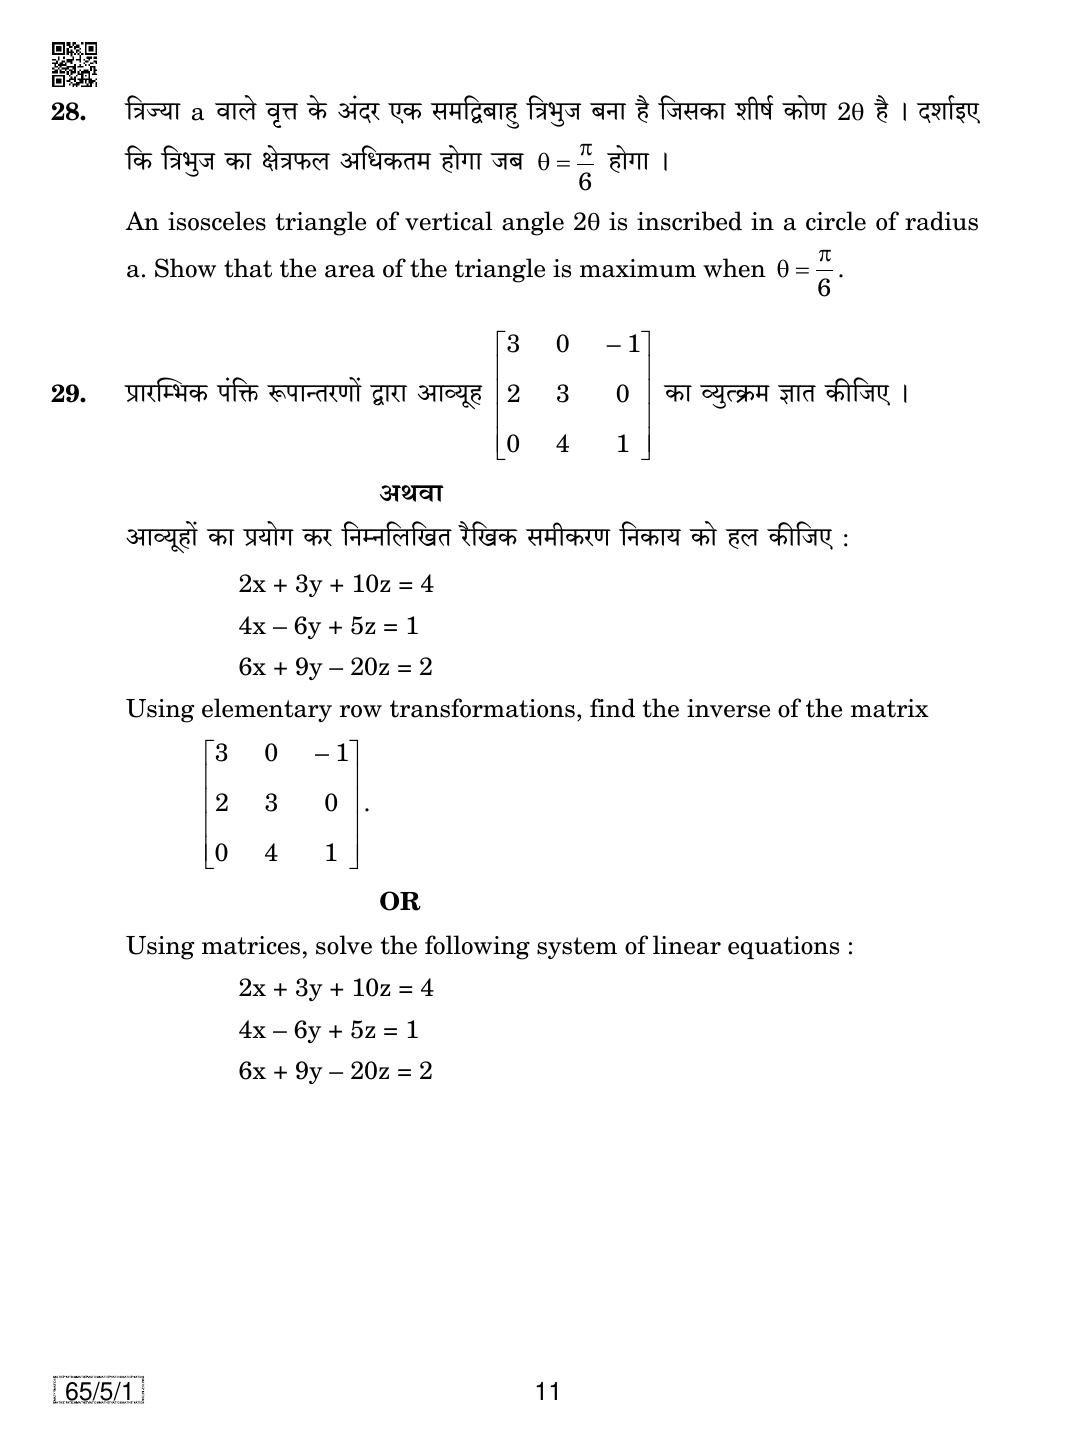 CBSE Class 12 65-5-1 Mathematics 2019 Question Paper - Page 11